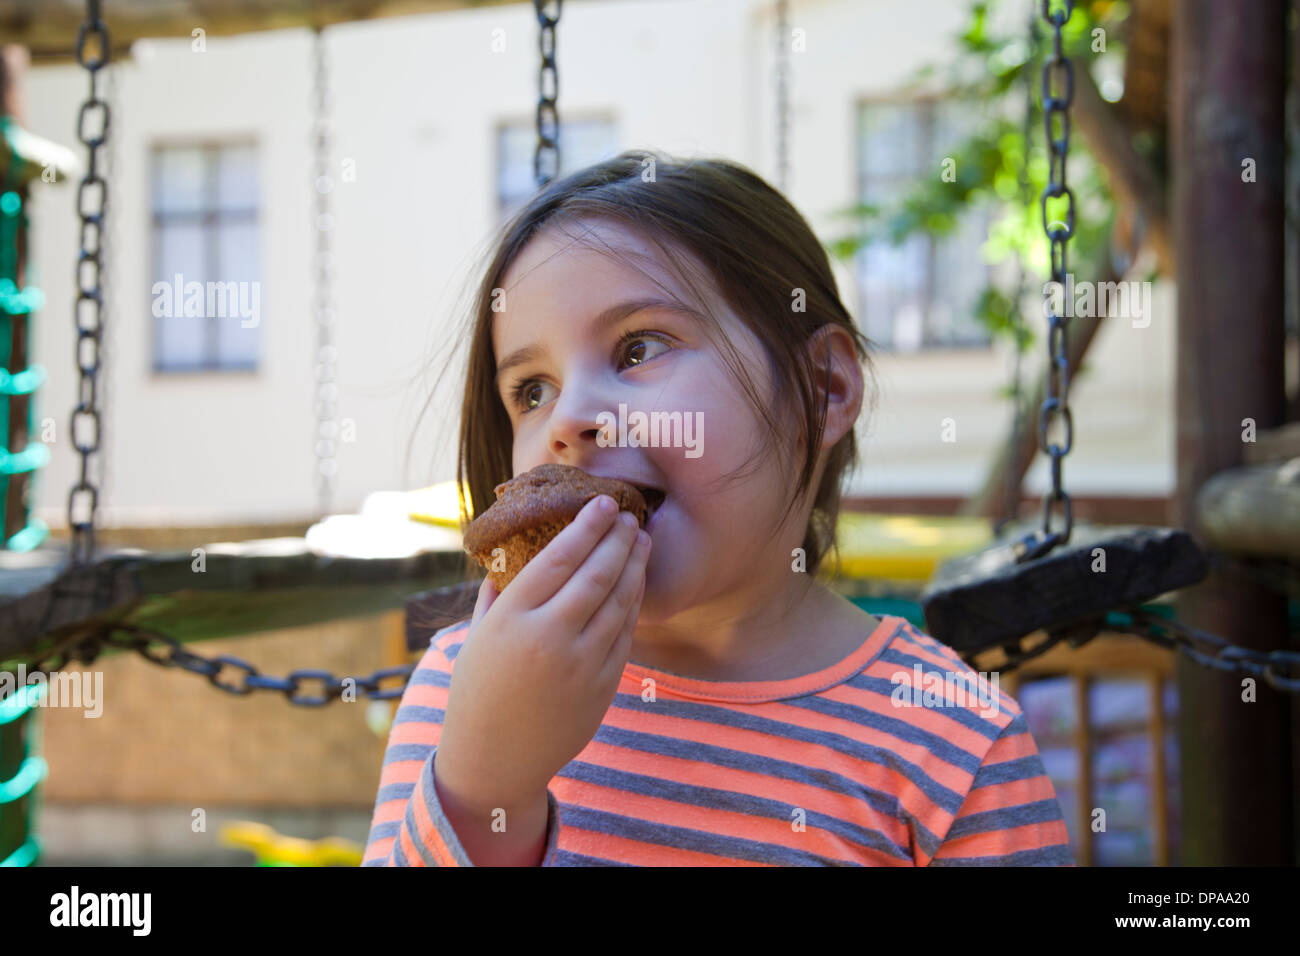 Girl in Playground Eating Cupcake Stock Photo